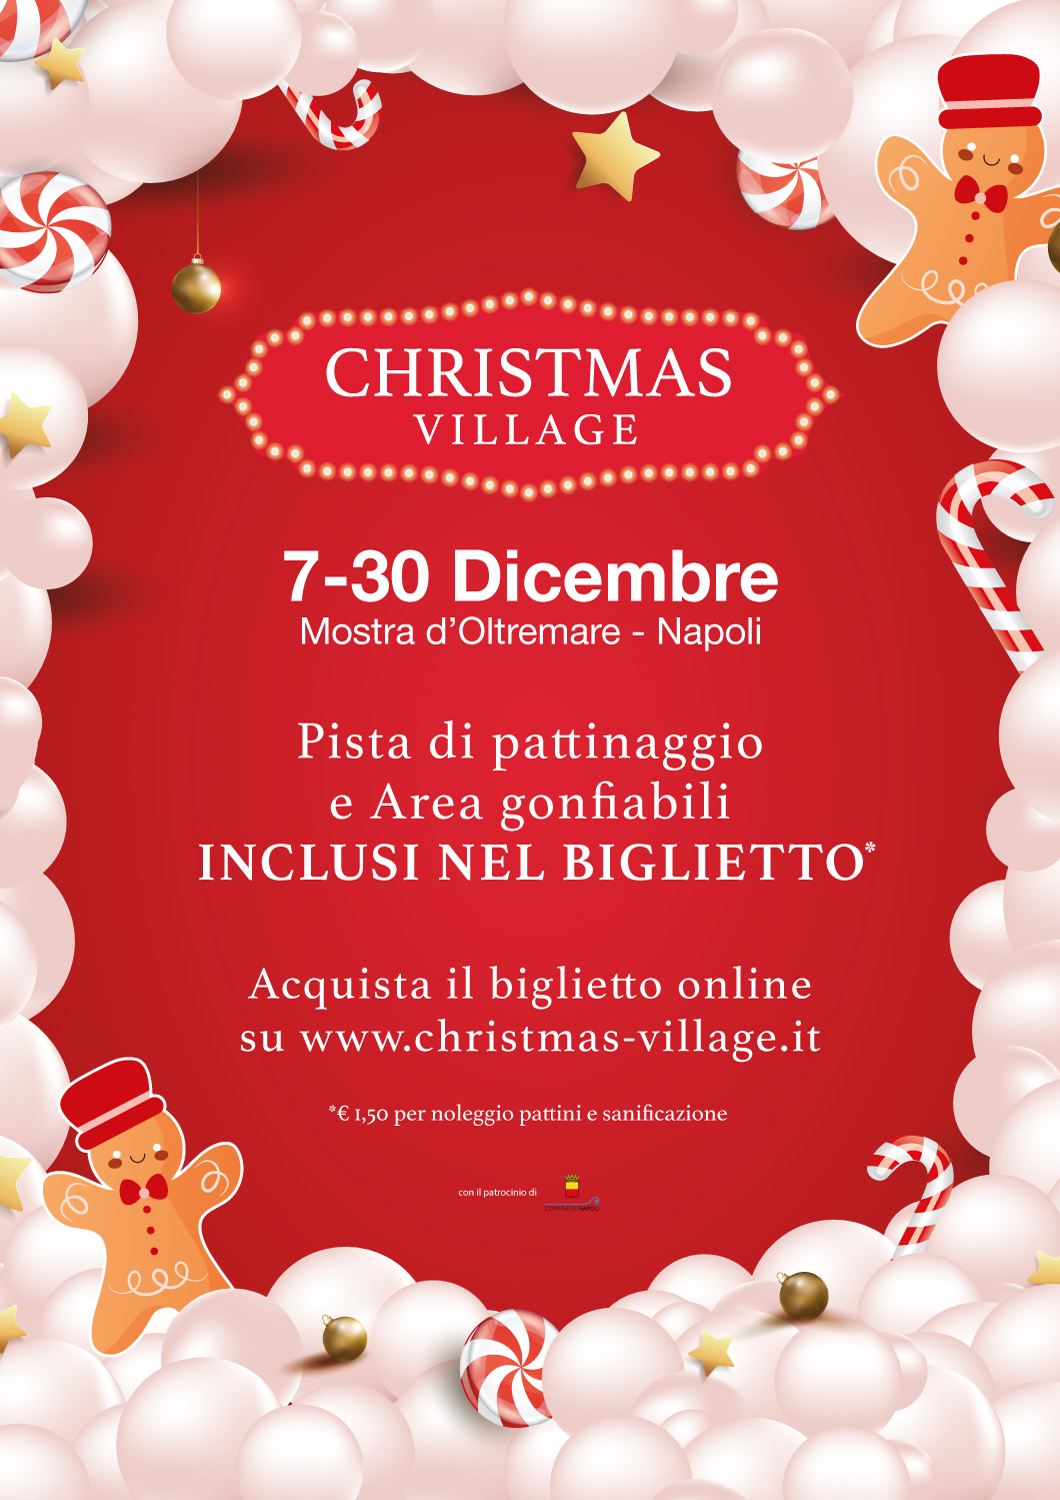 Napoli - Christmas Village - Mostra d'Oltremare